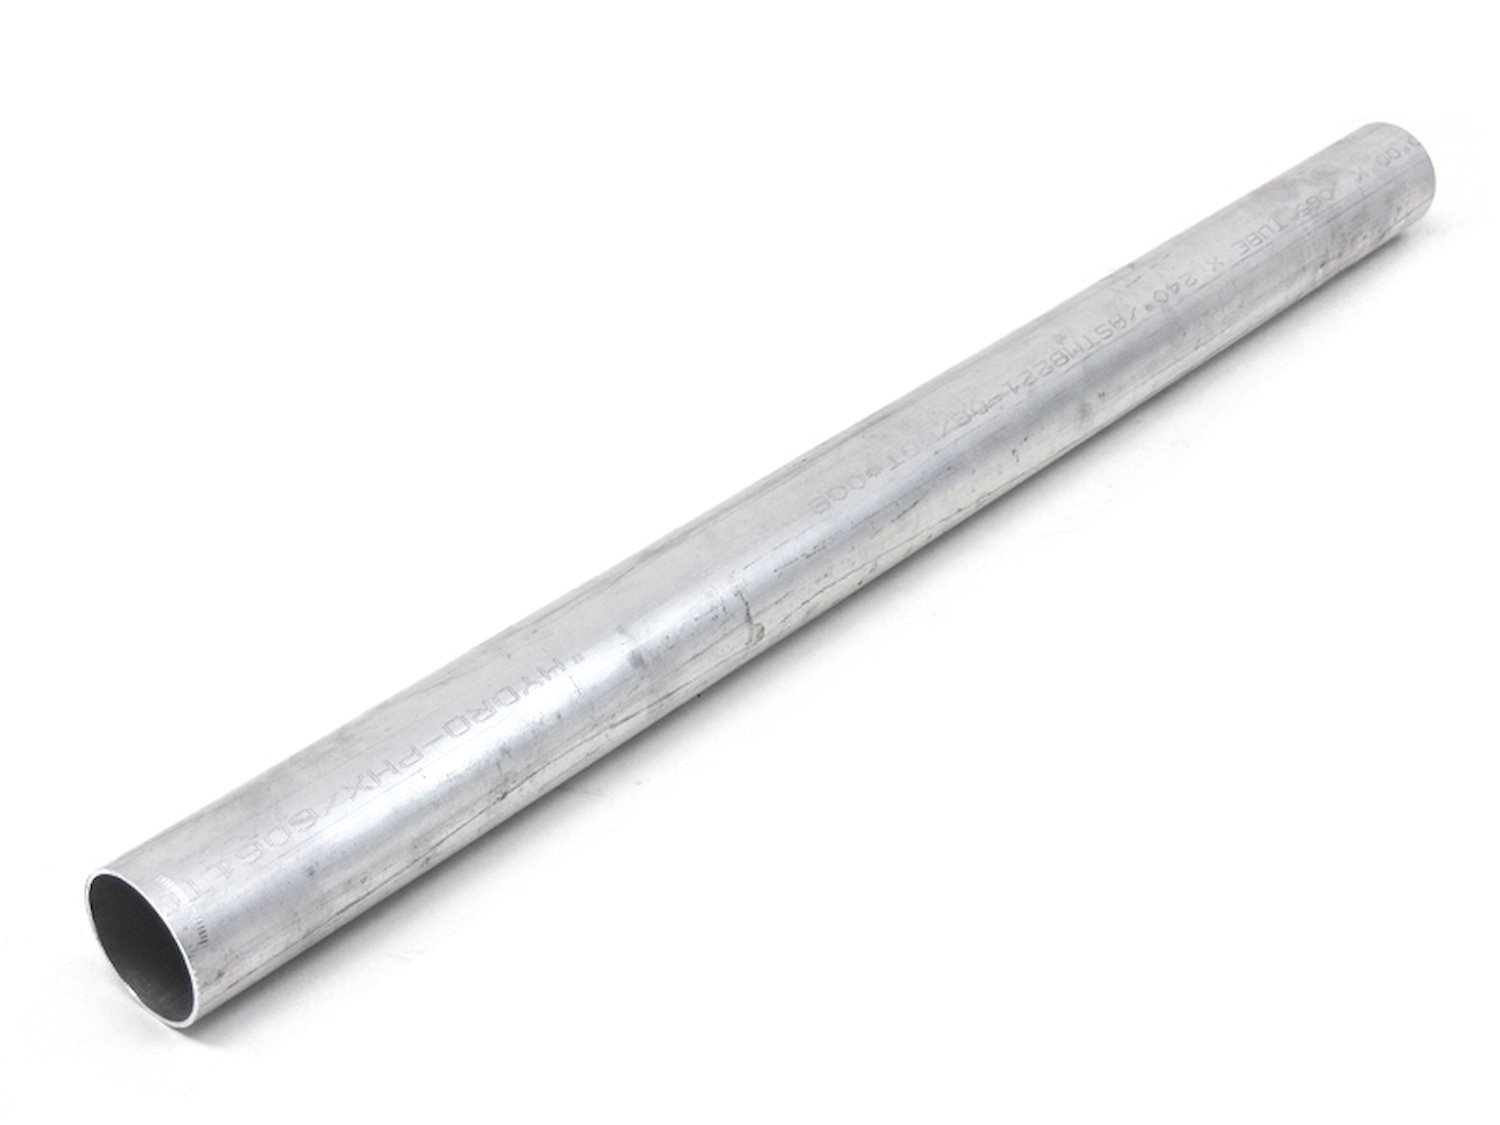 AST-3F-175 Aluminum Tubing, 6061 Aluminum, Straight Tubing, 1-3/4 in. OD, Seamless, Raw Finish, 3 ft. Long